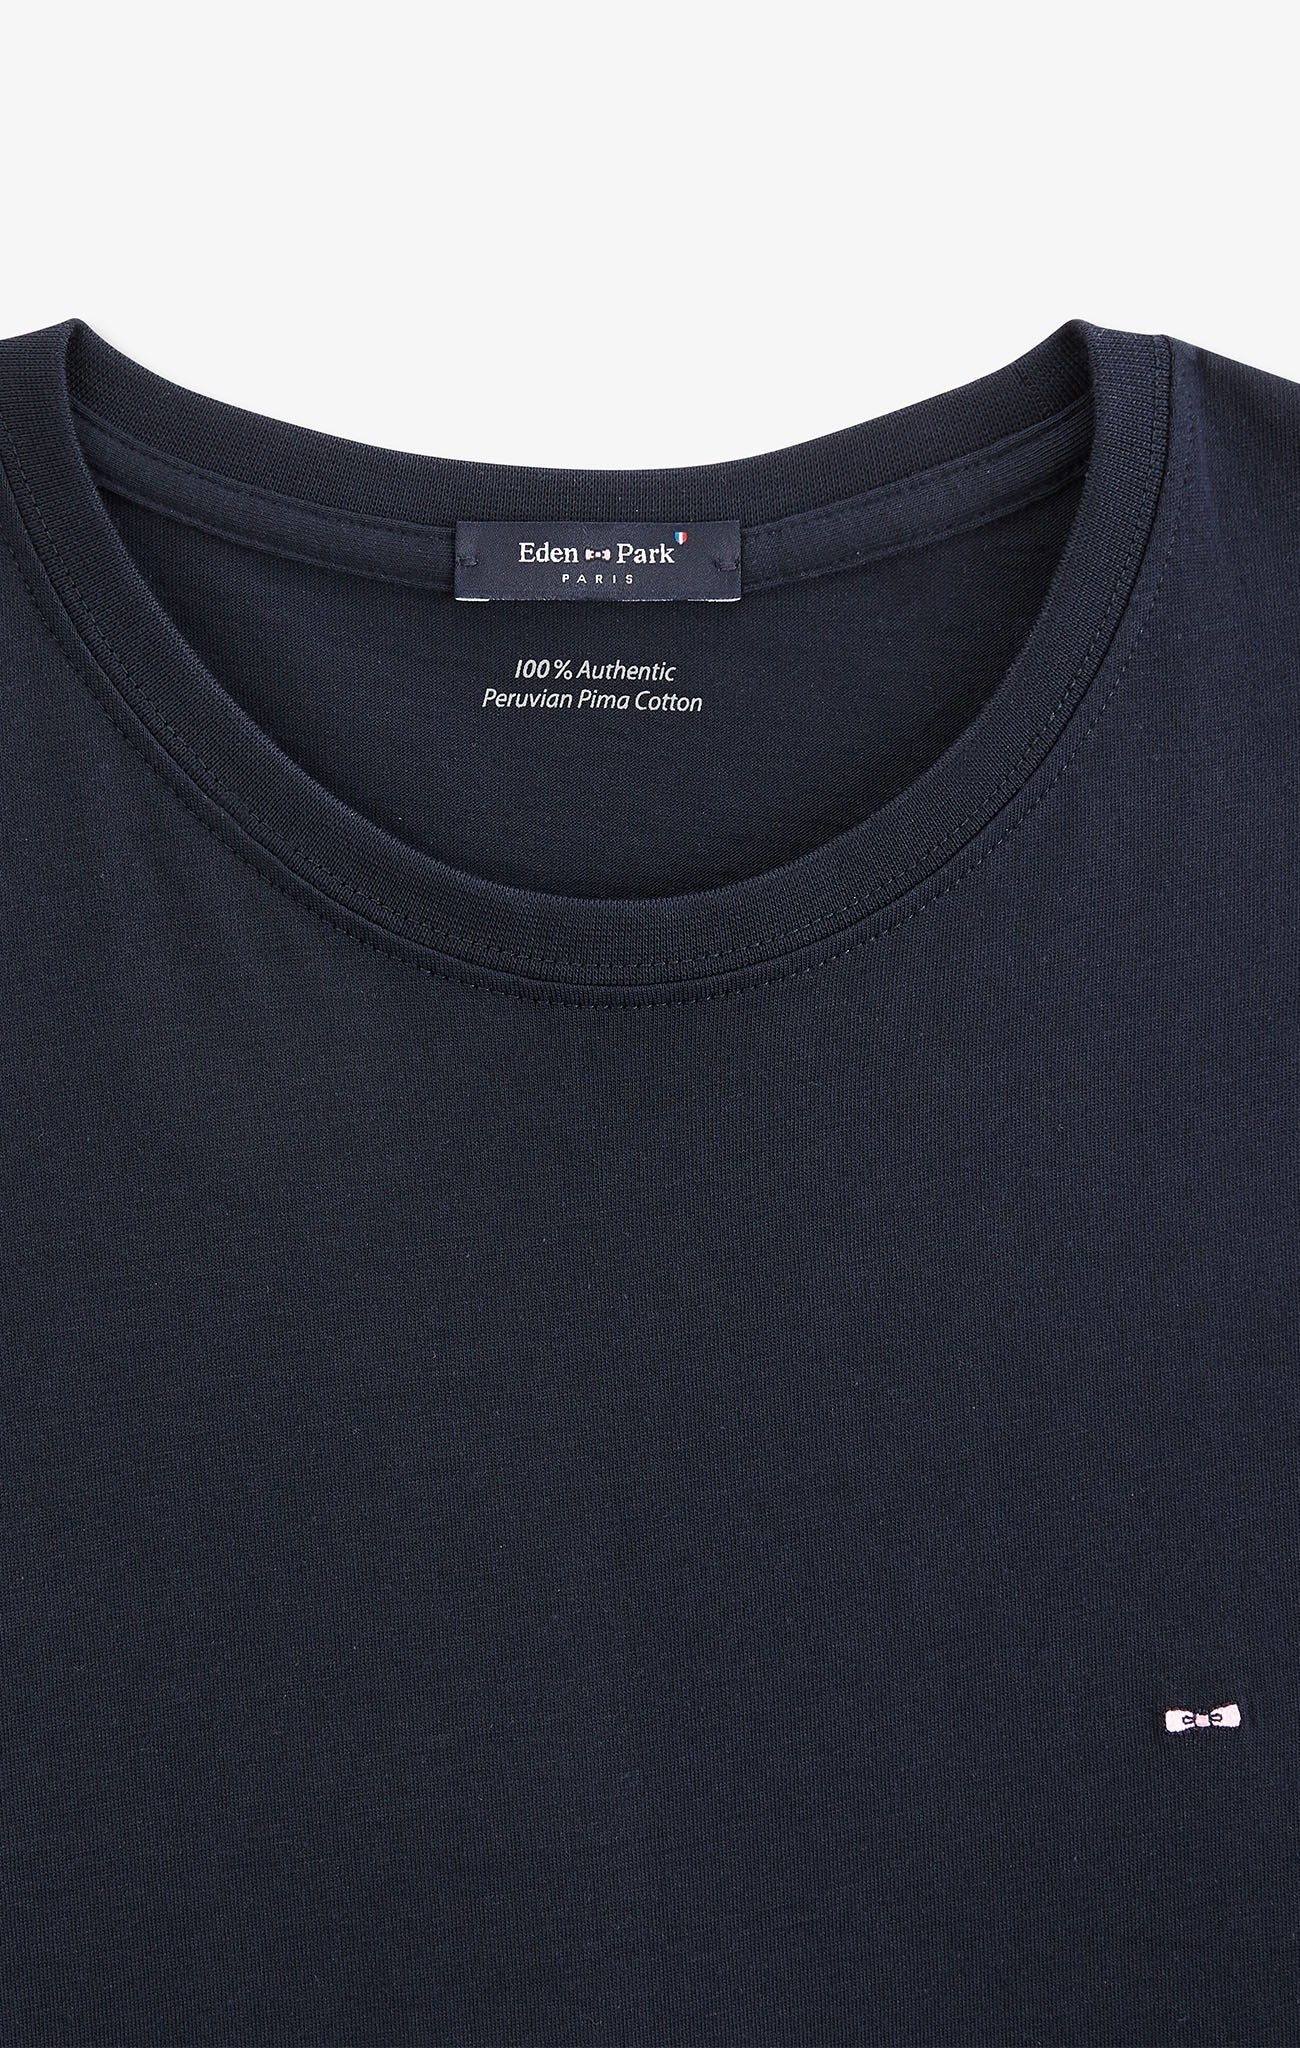 T-shirt bleu marine col rond à manches longues - Image 7